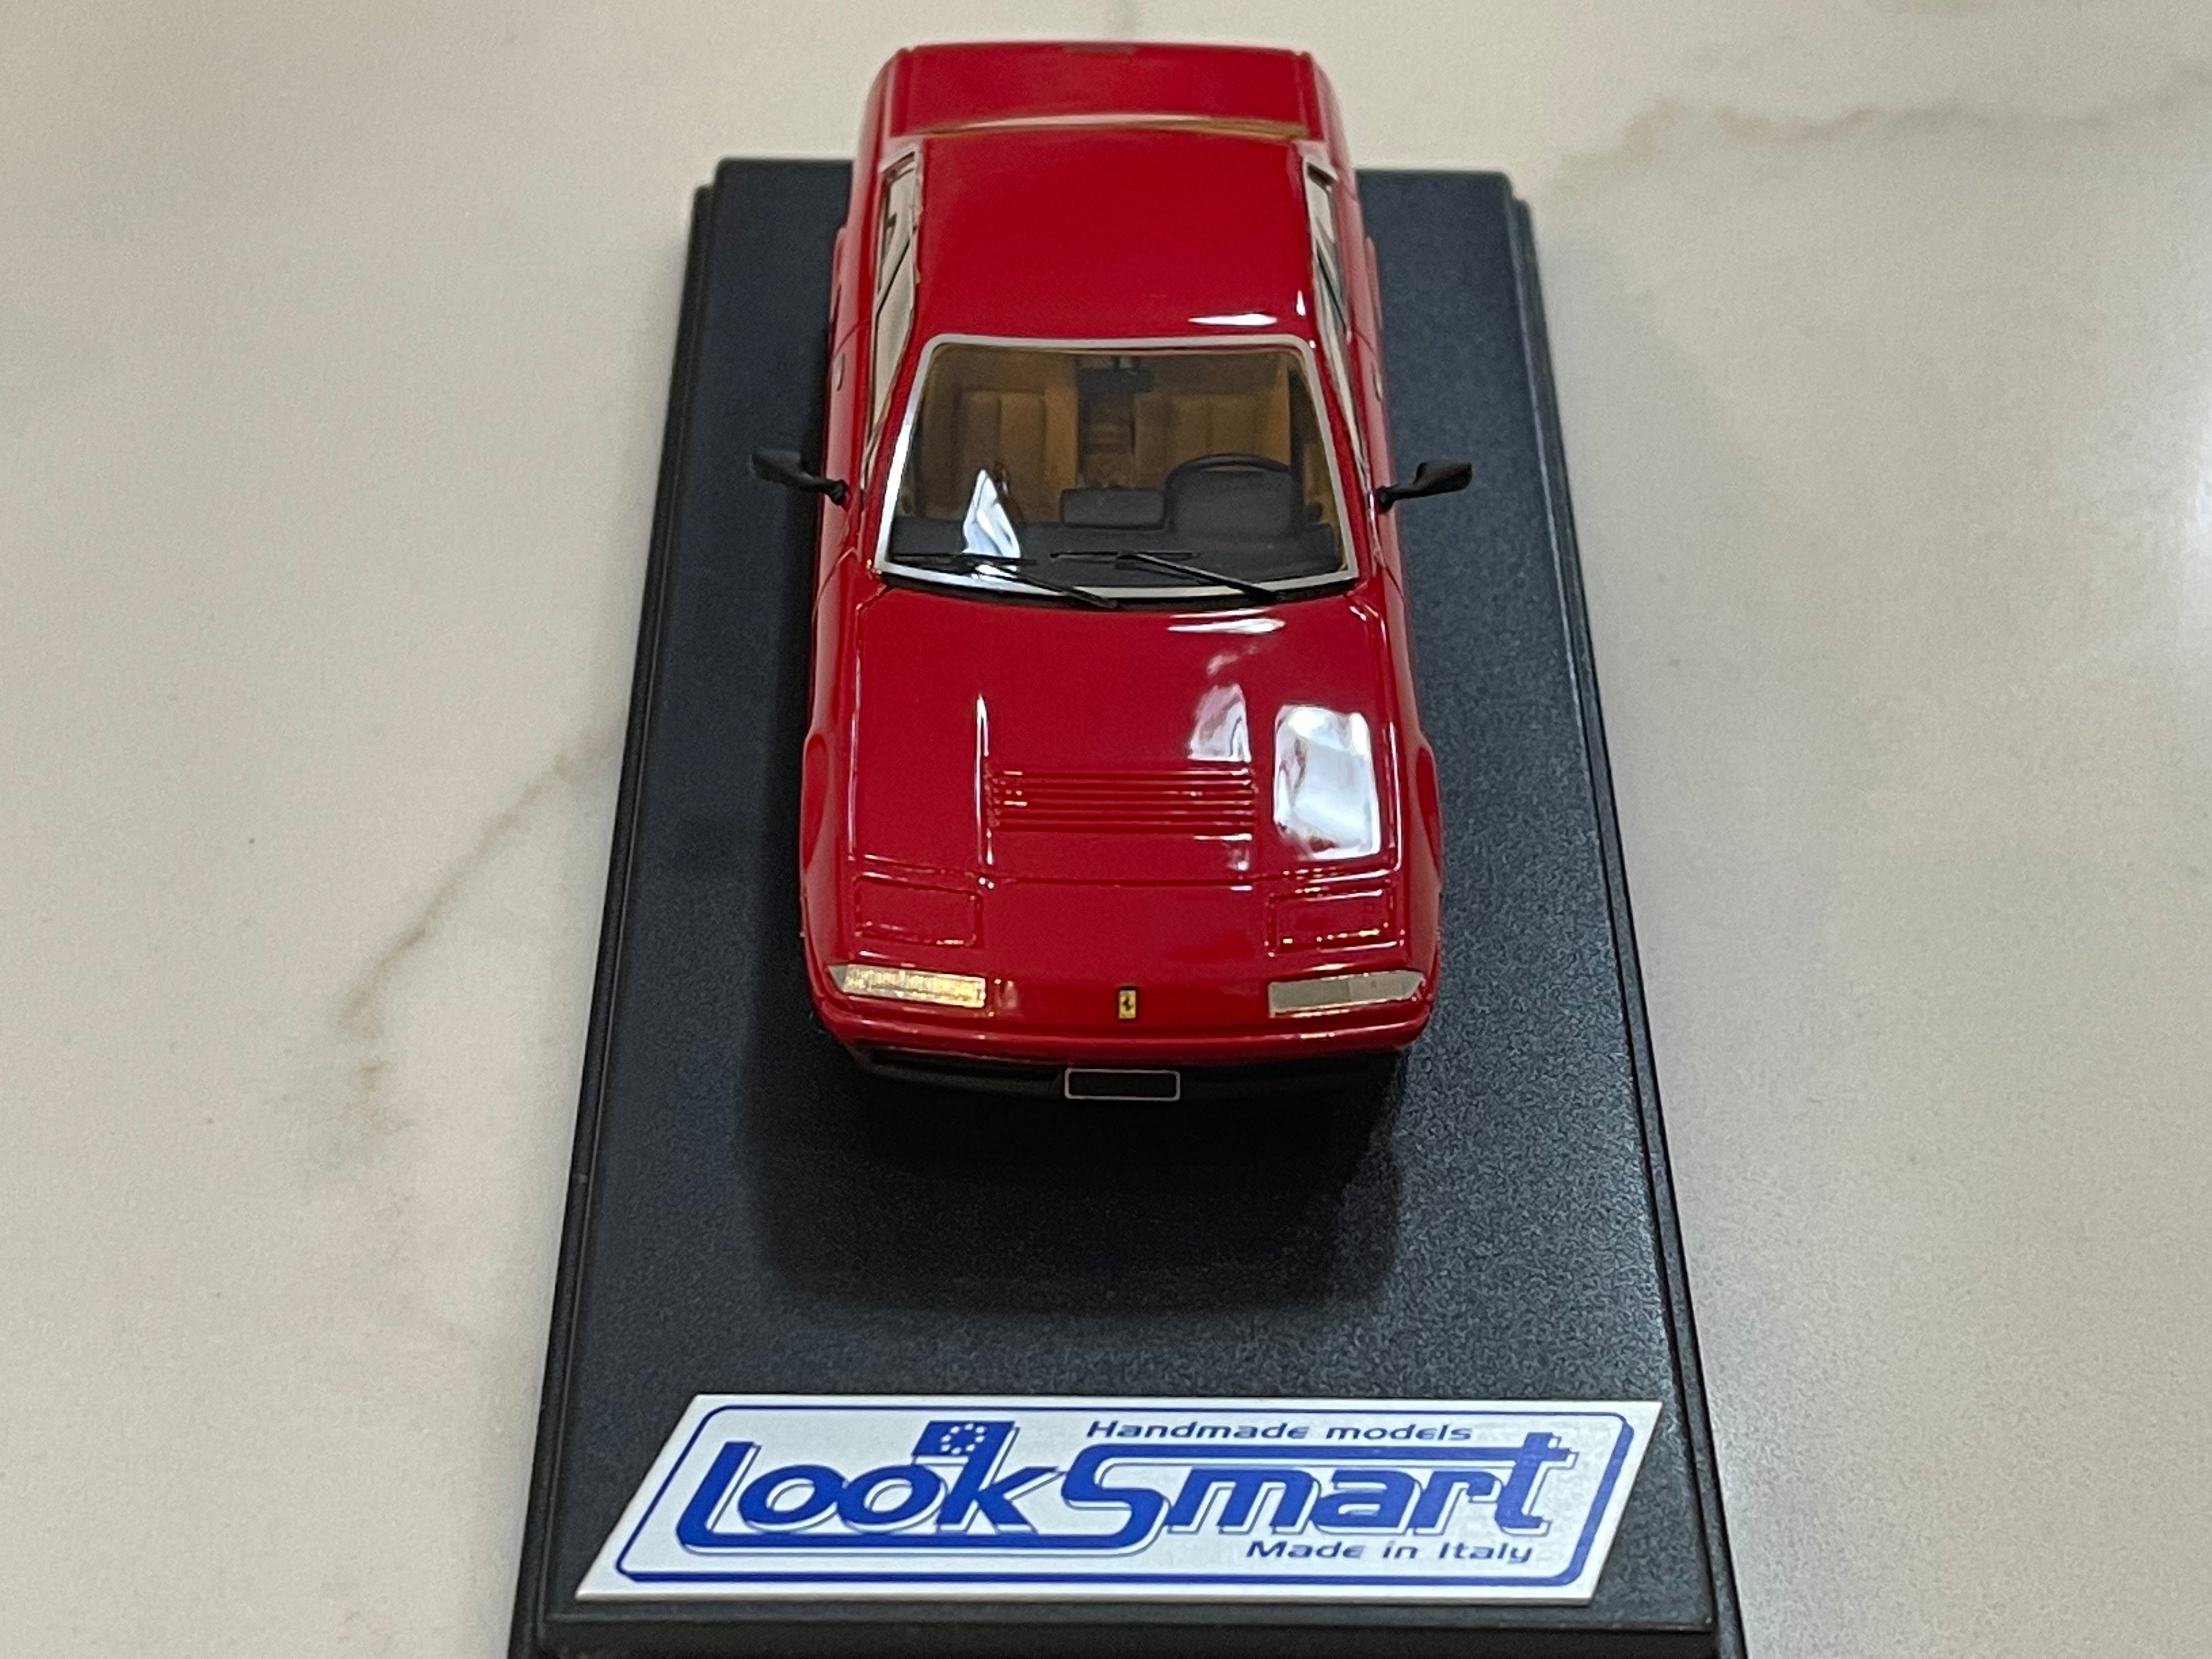 Looksmart 1/43 Ferrari 412 2+2 1985 Red LS24A